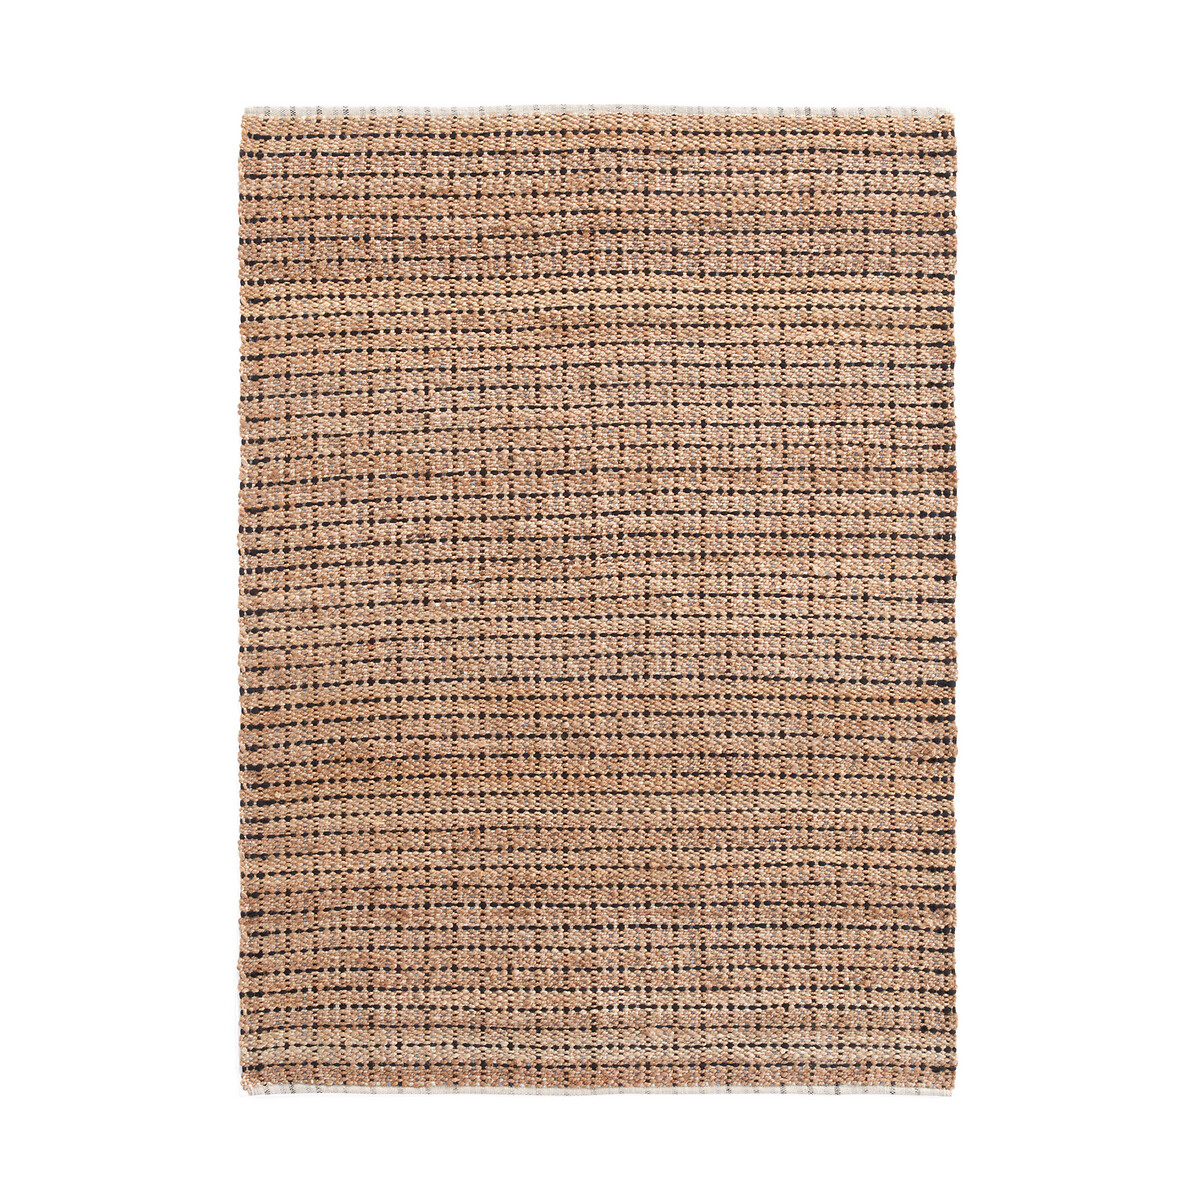 Ковер LaRedoute Ручное плетение Chaffa 160 x 230 см другие, размер 160 x 230 см - фото 1